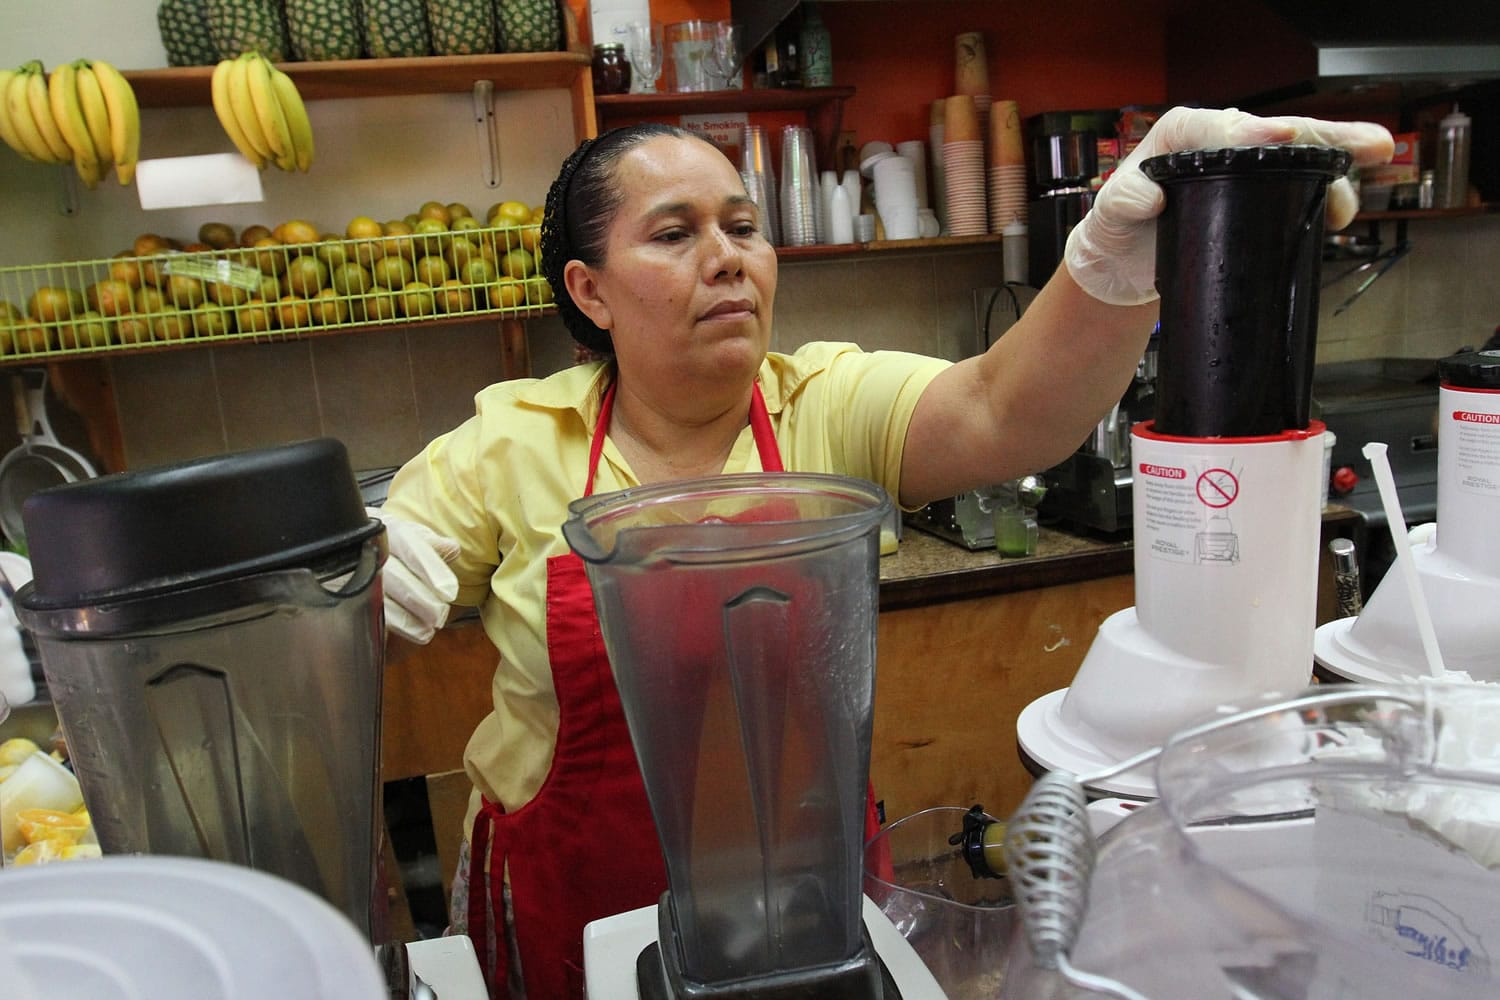 Celina Alvarez, 51, works at Jugueria de regreso al Eden, her shop in the Queens borough of New York, on Aug. 3.